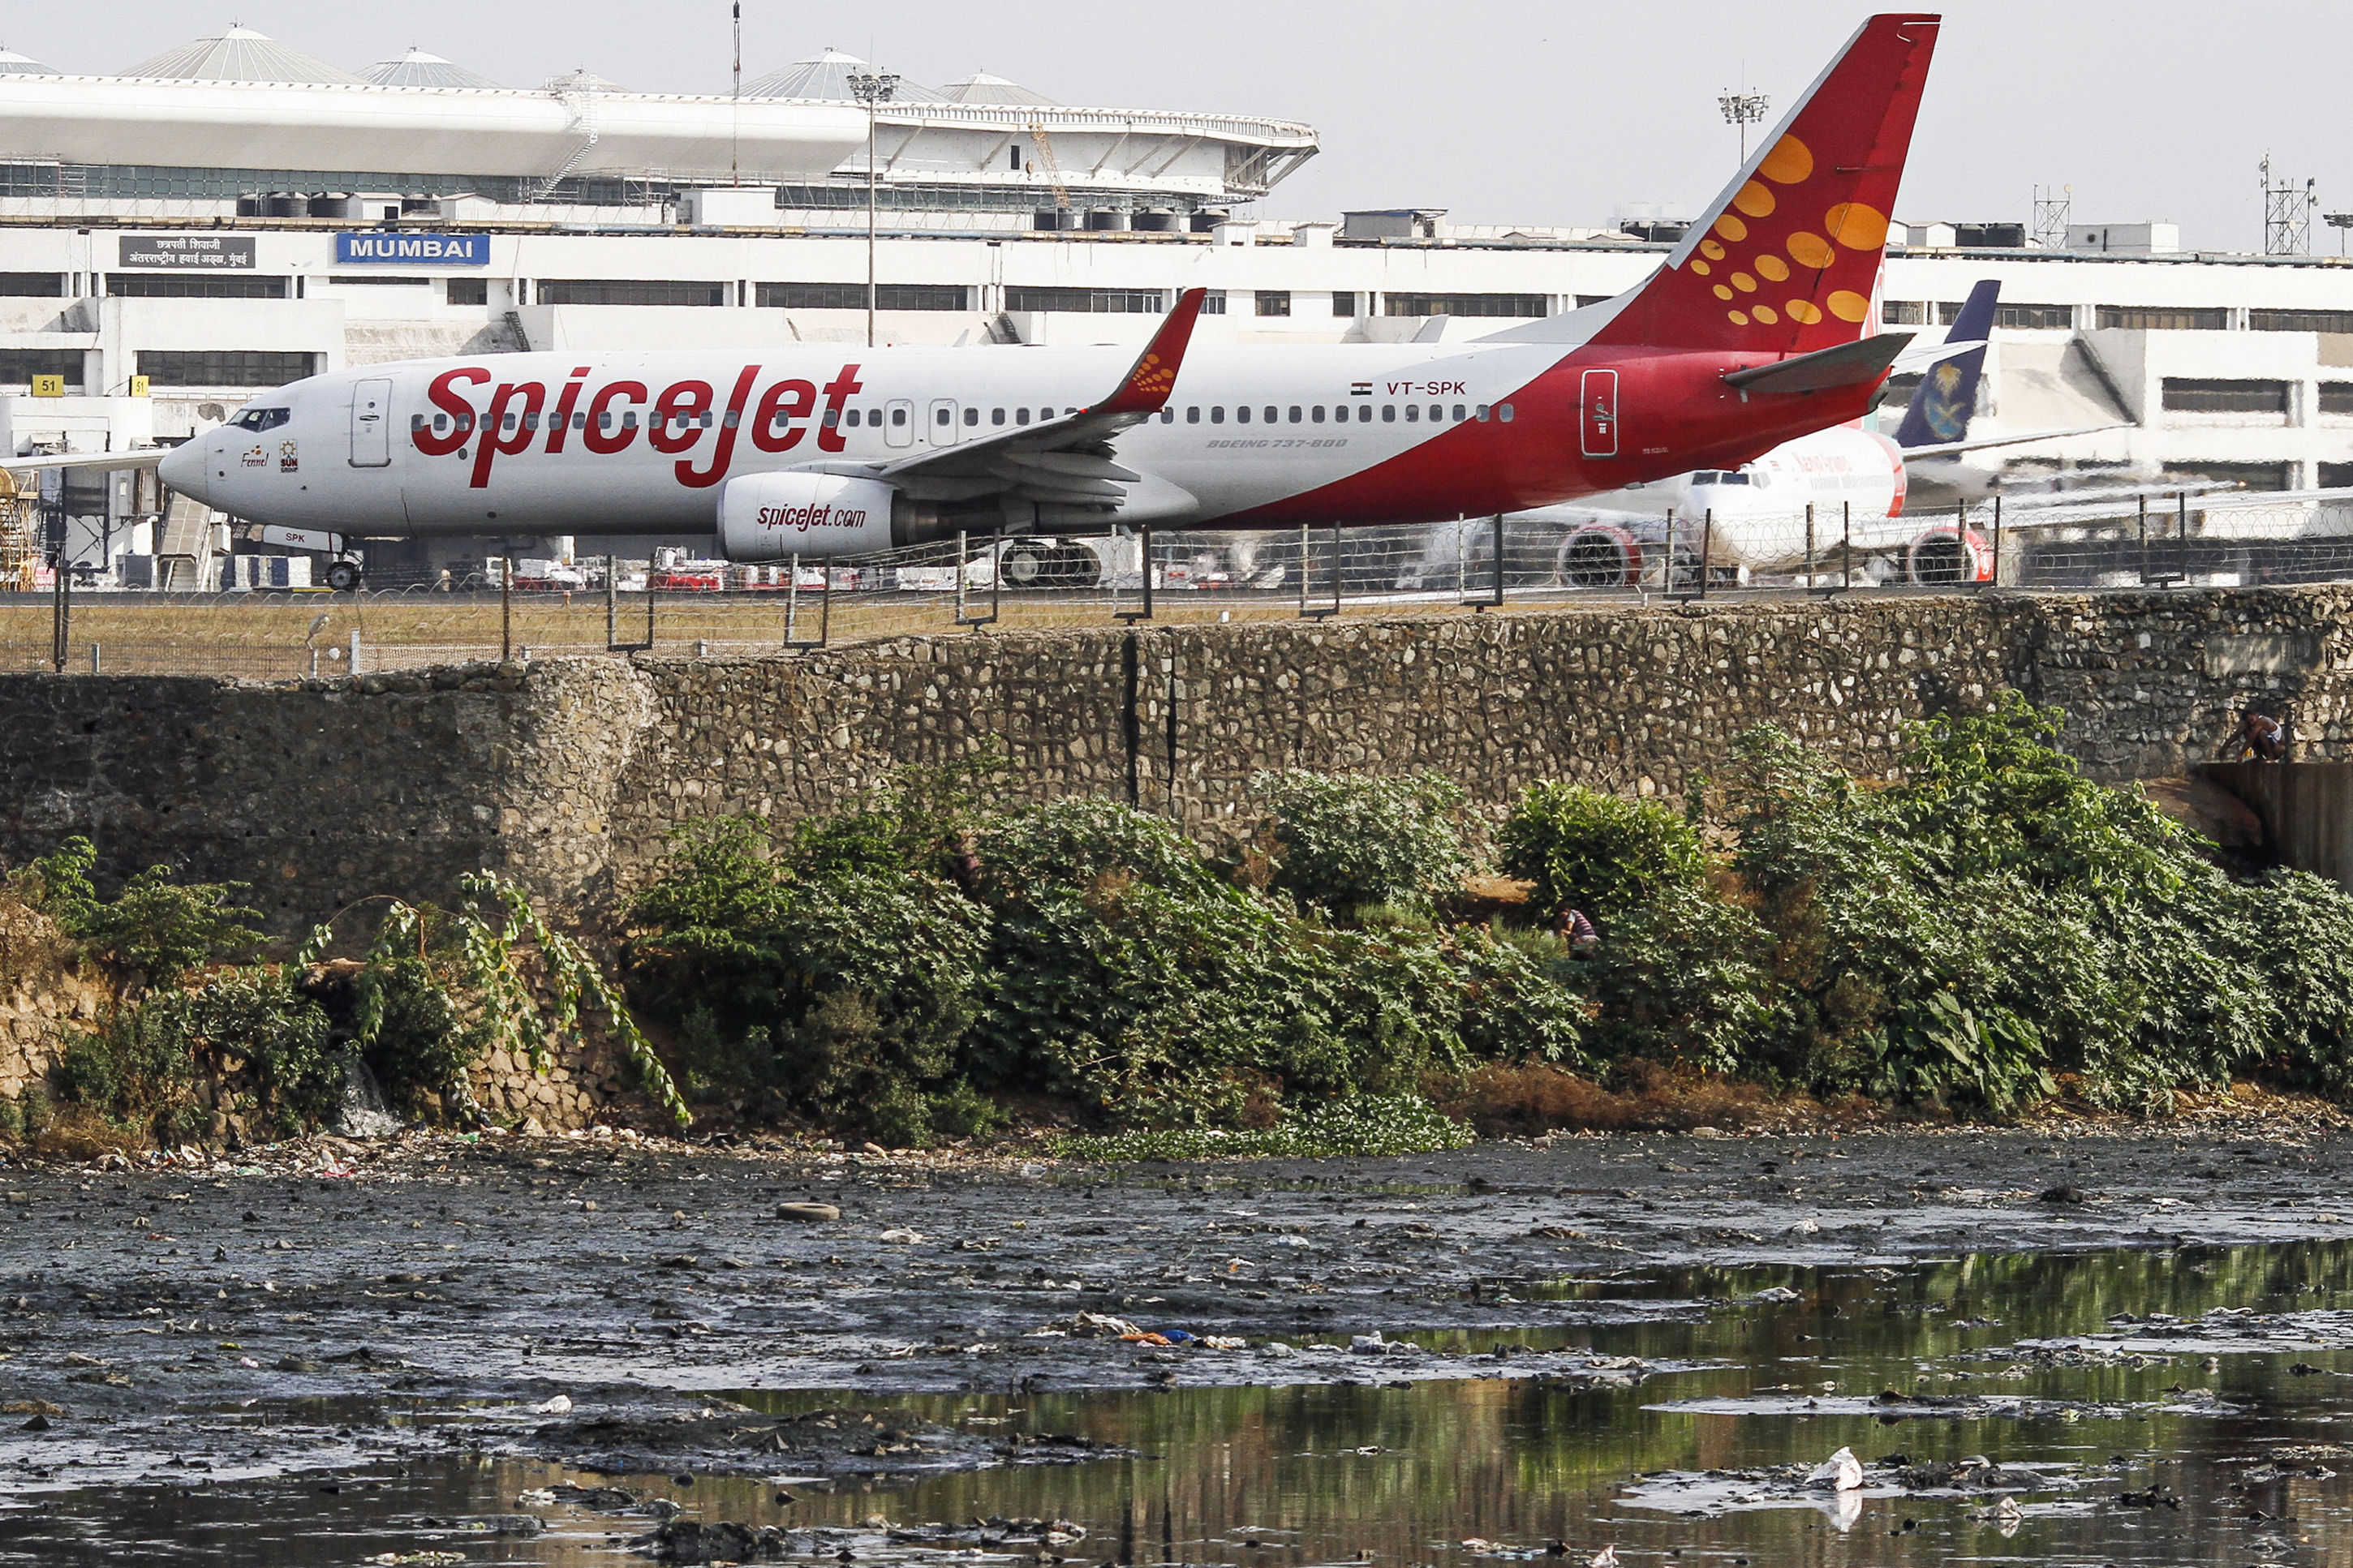 A SpiceJet Ltd. aircraft stands on the tarmac at Chhatrapati Shivaji International Airport in Mumbai, India.
